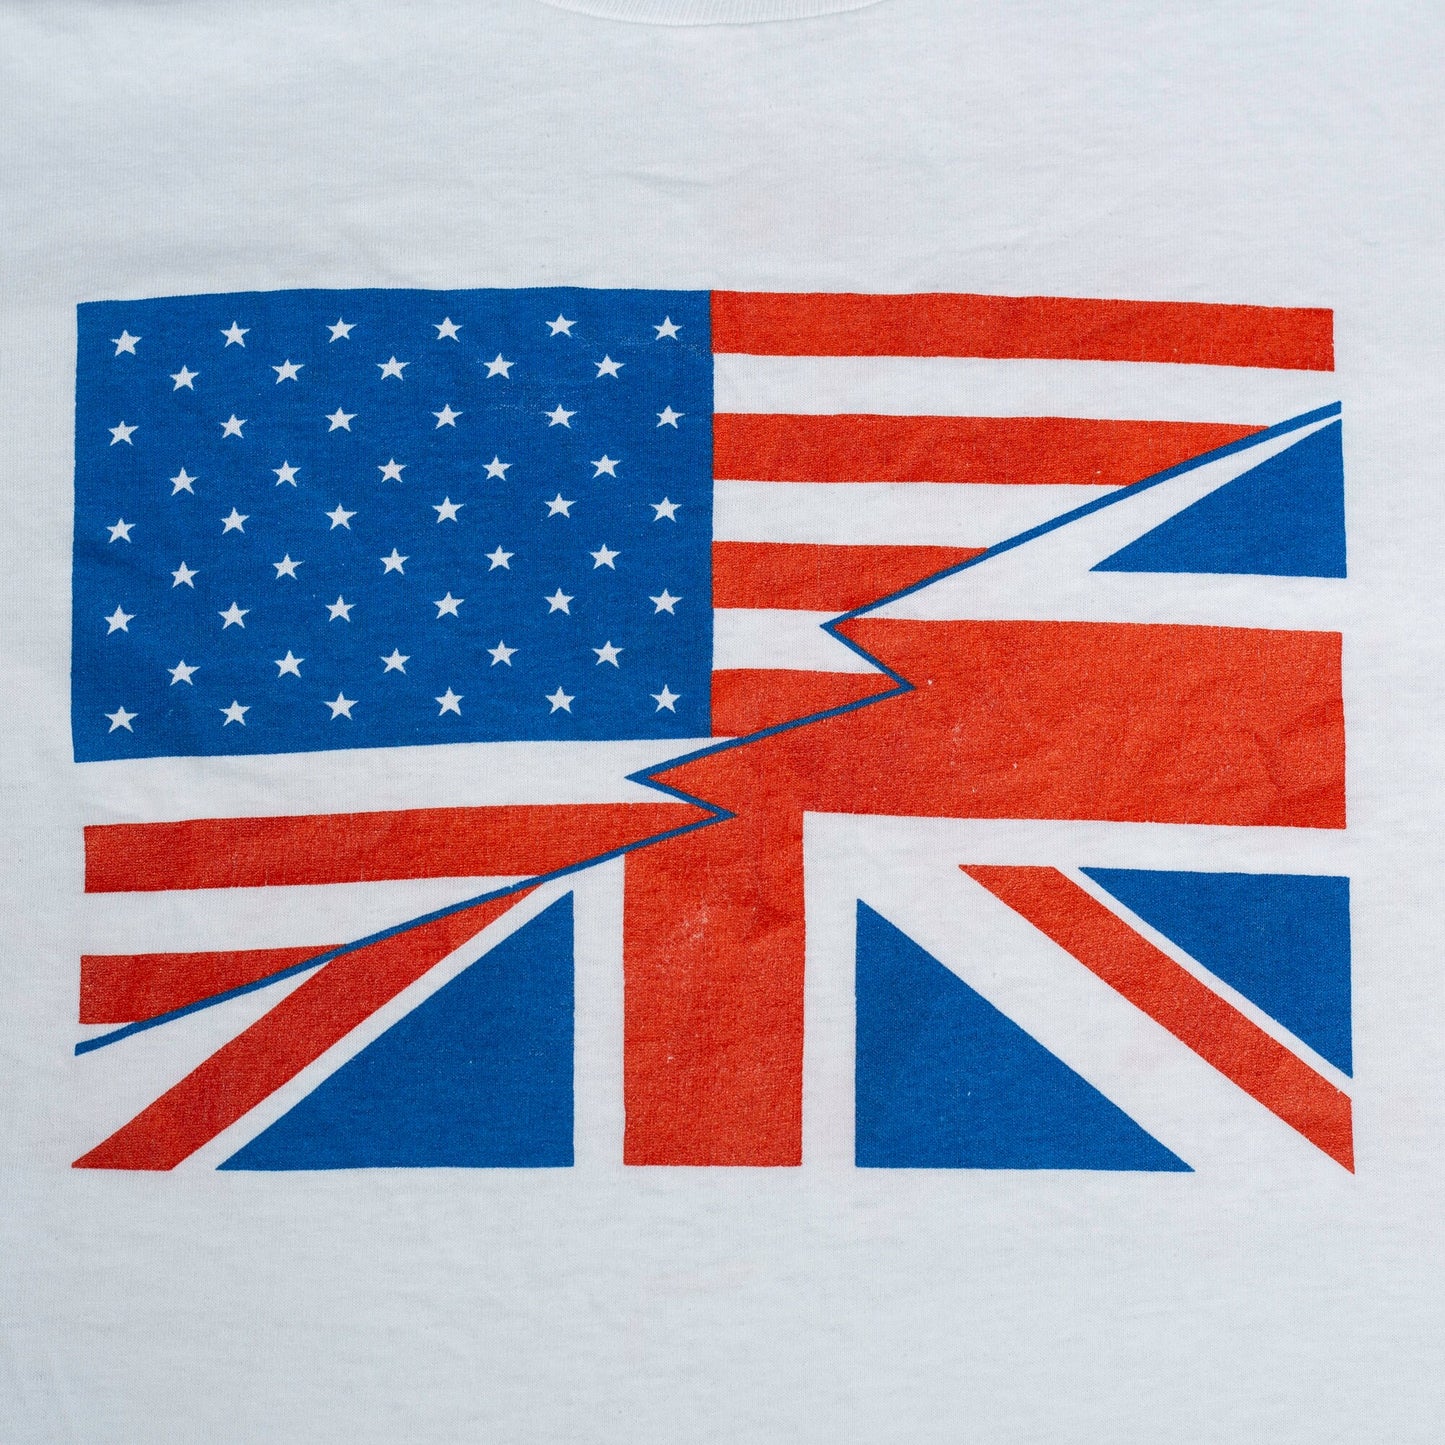 90s American Flag Union Jack T Shirt - Men's Large, Women's XL | Vintage USA England Graphic Tee